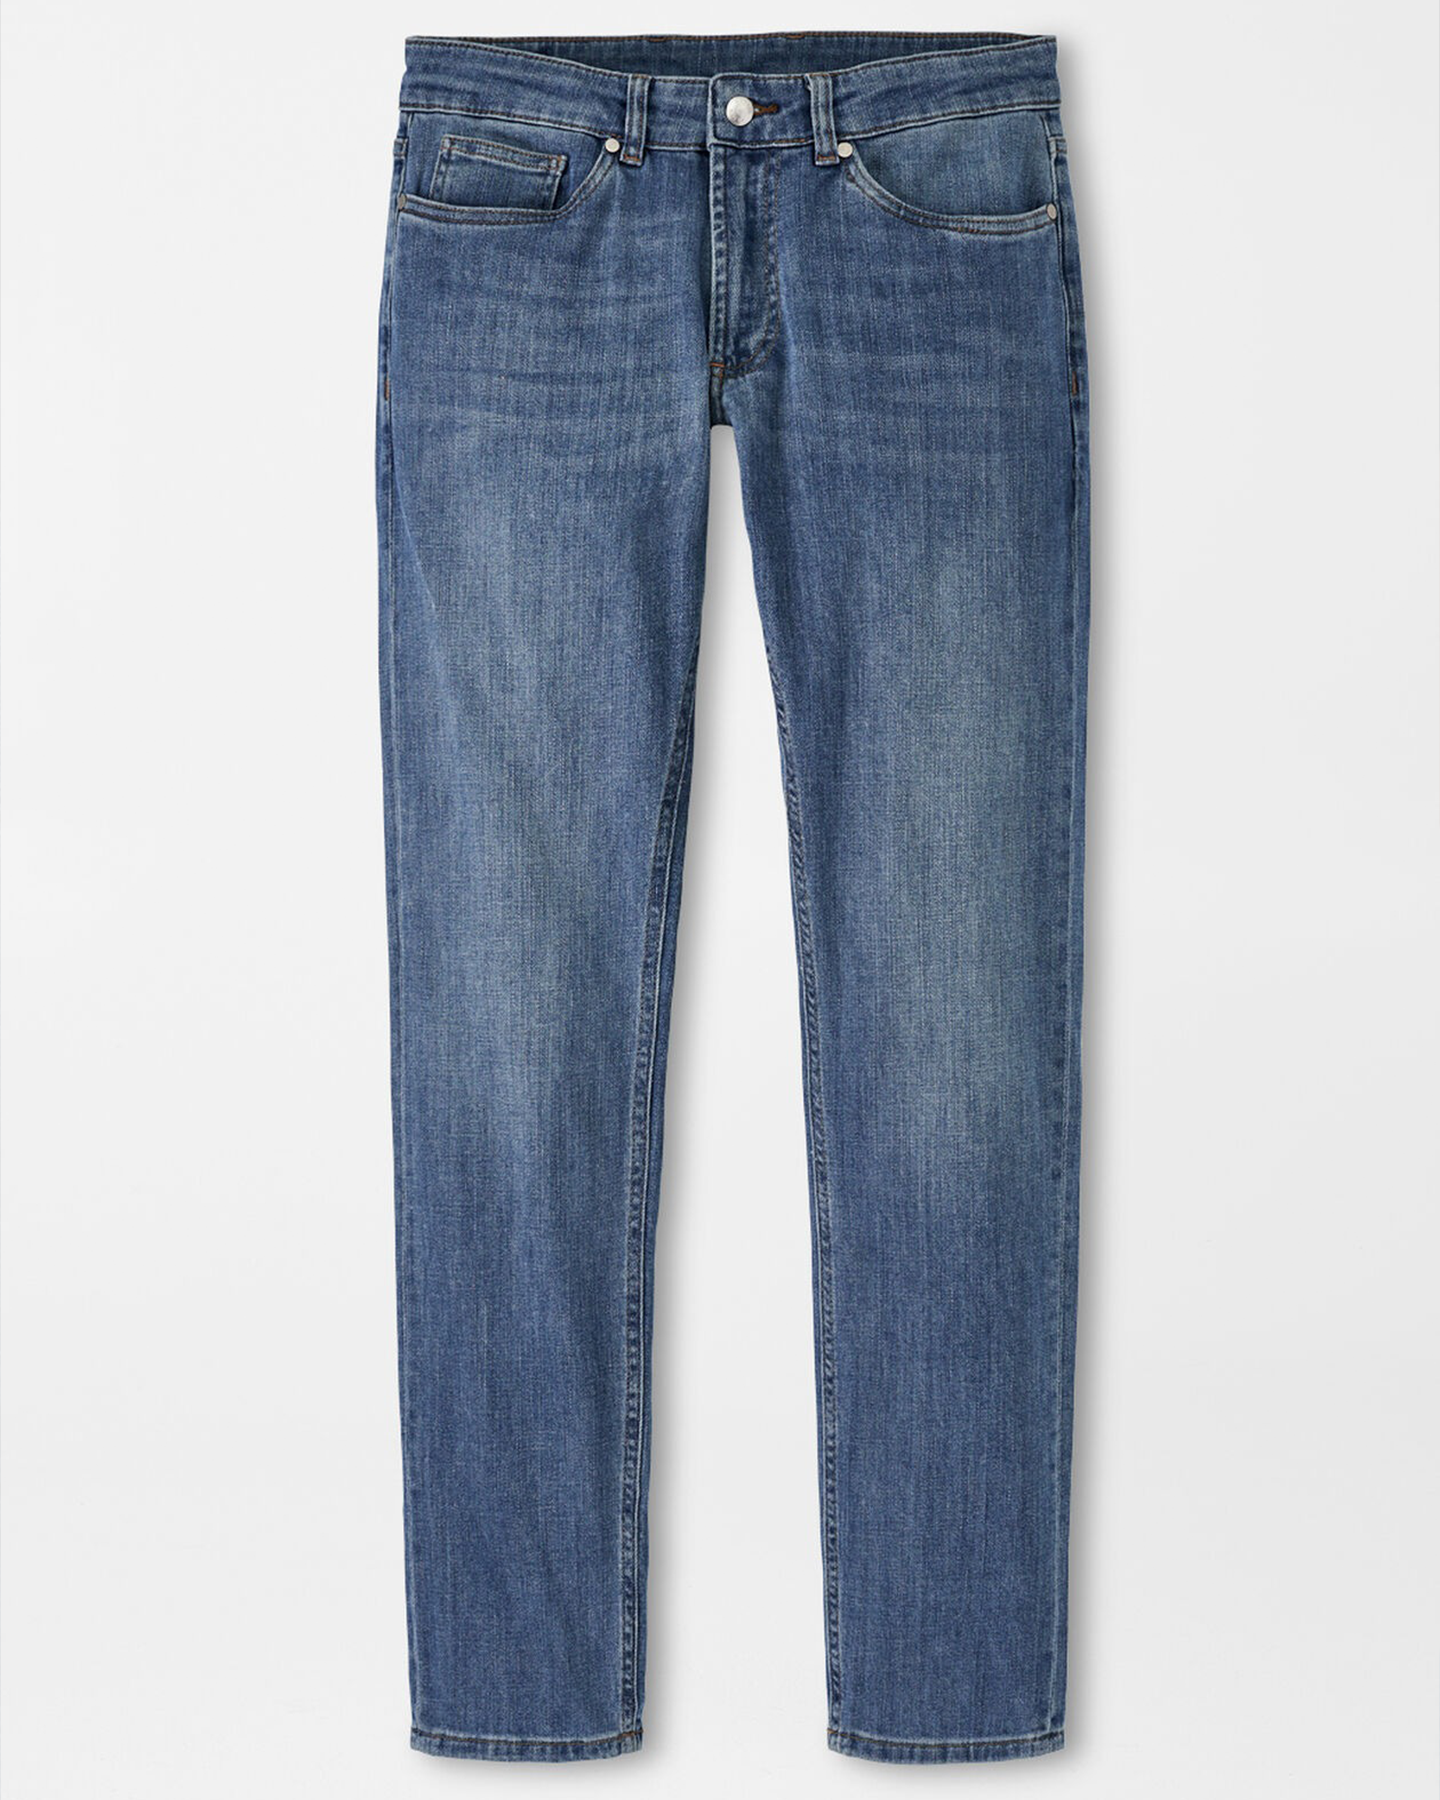 5 Pocket Classic Fit Denim Jean in Tinted Indigo Wash by Bills Khakis